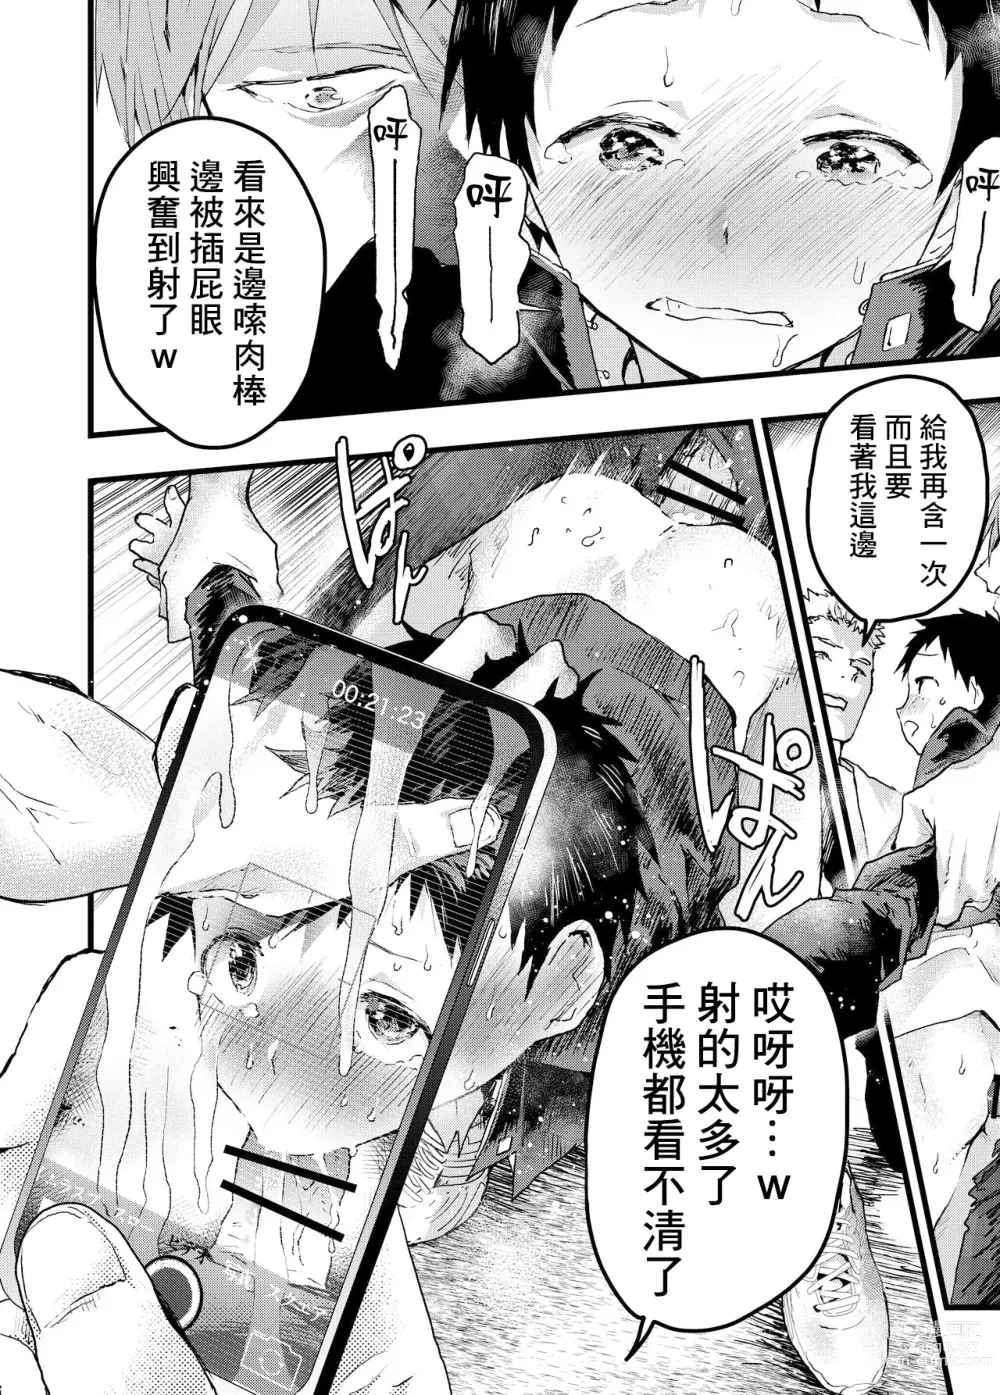 Page 14 of doujinshi 被癡漢強姦後墮入快樂深淵的少年